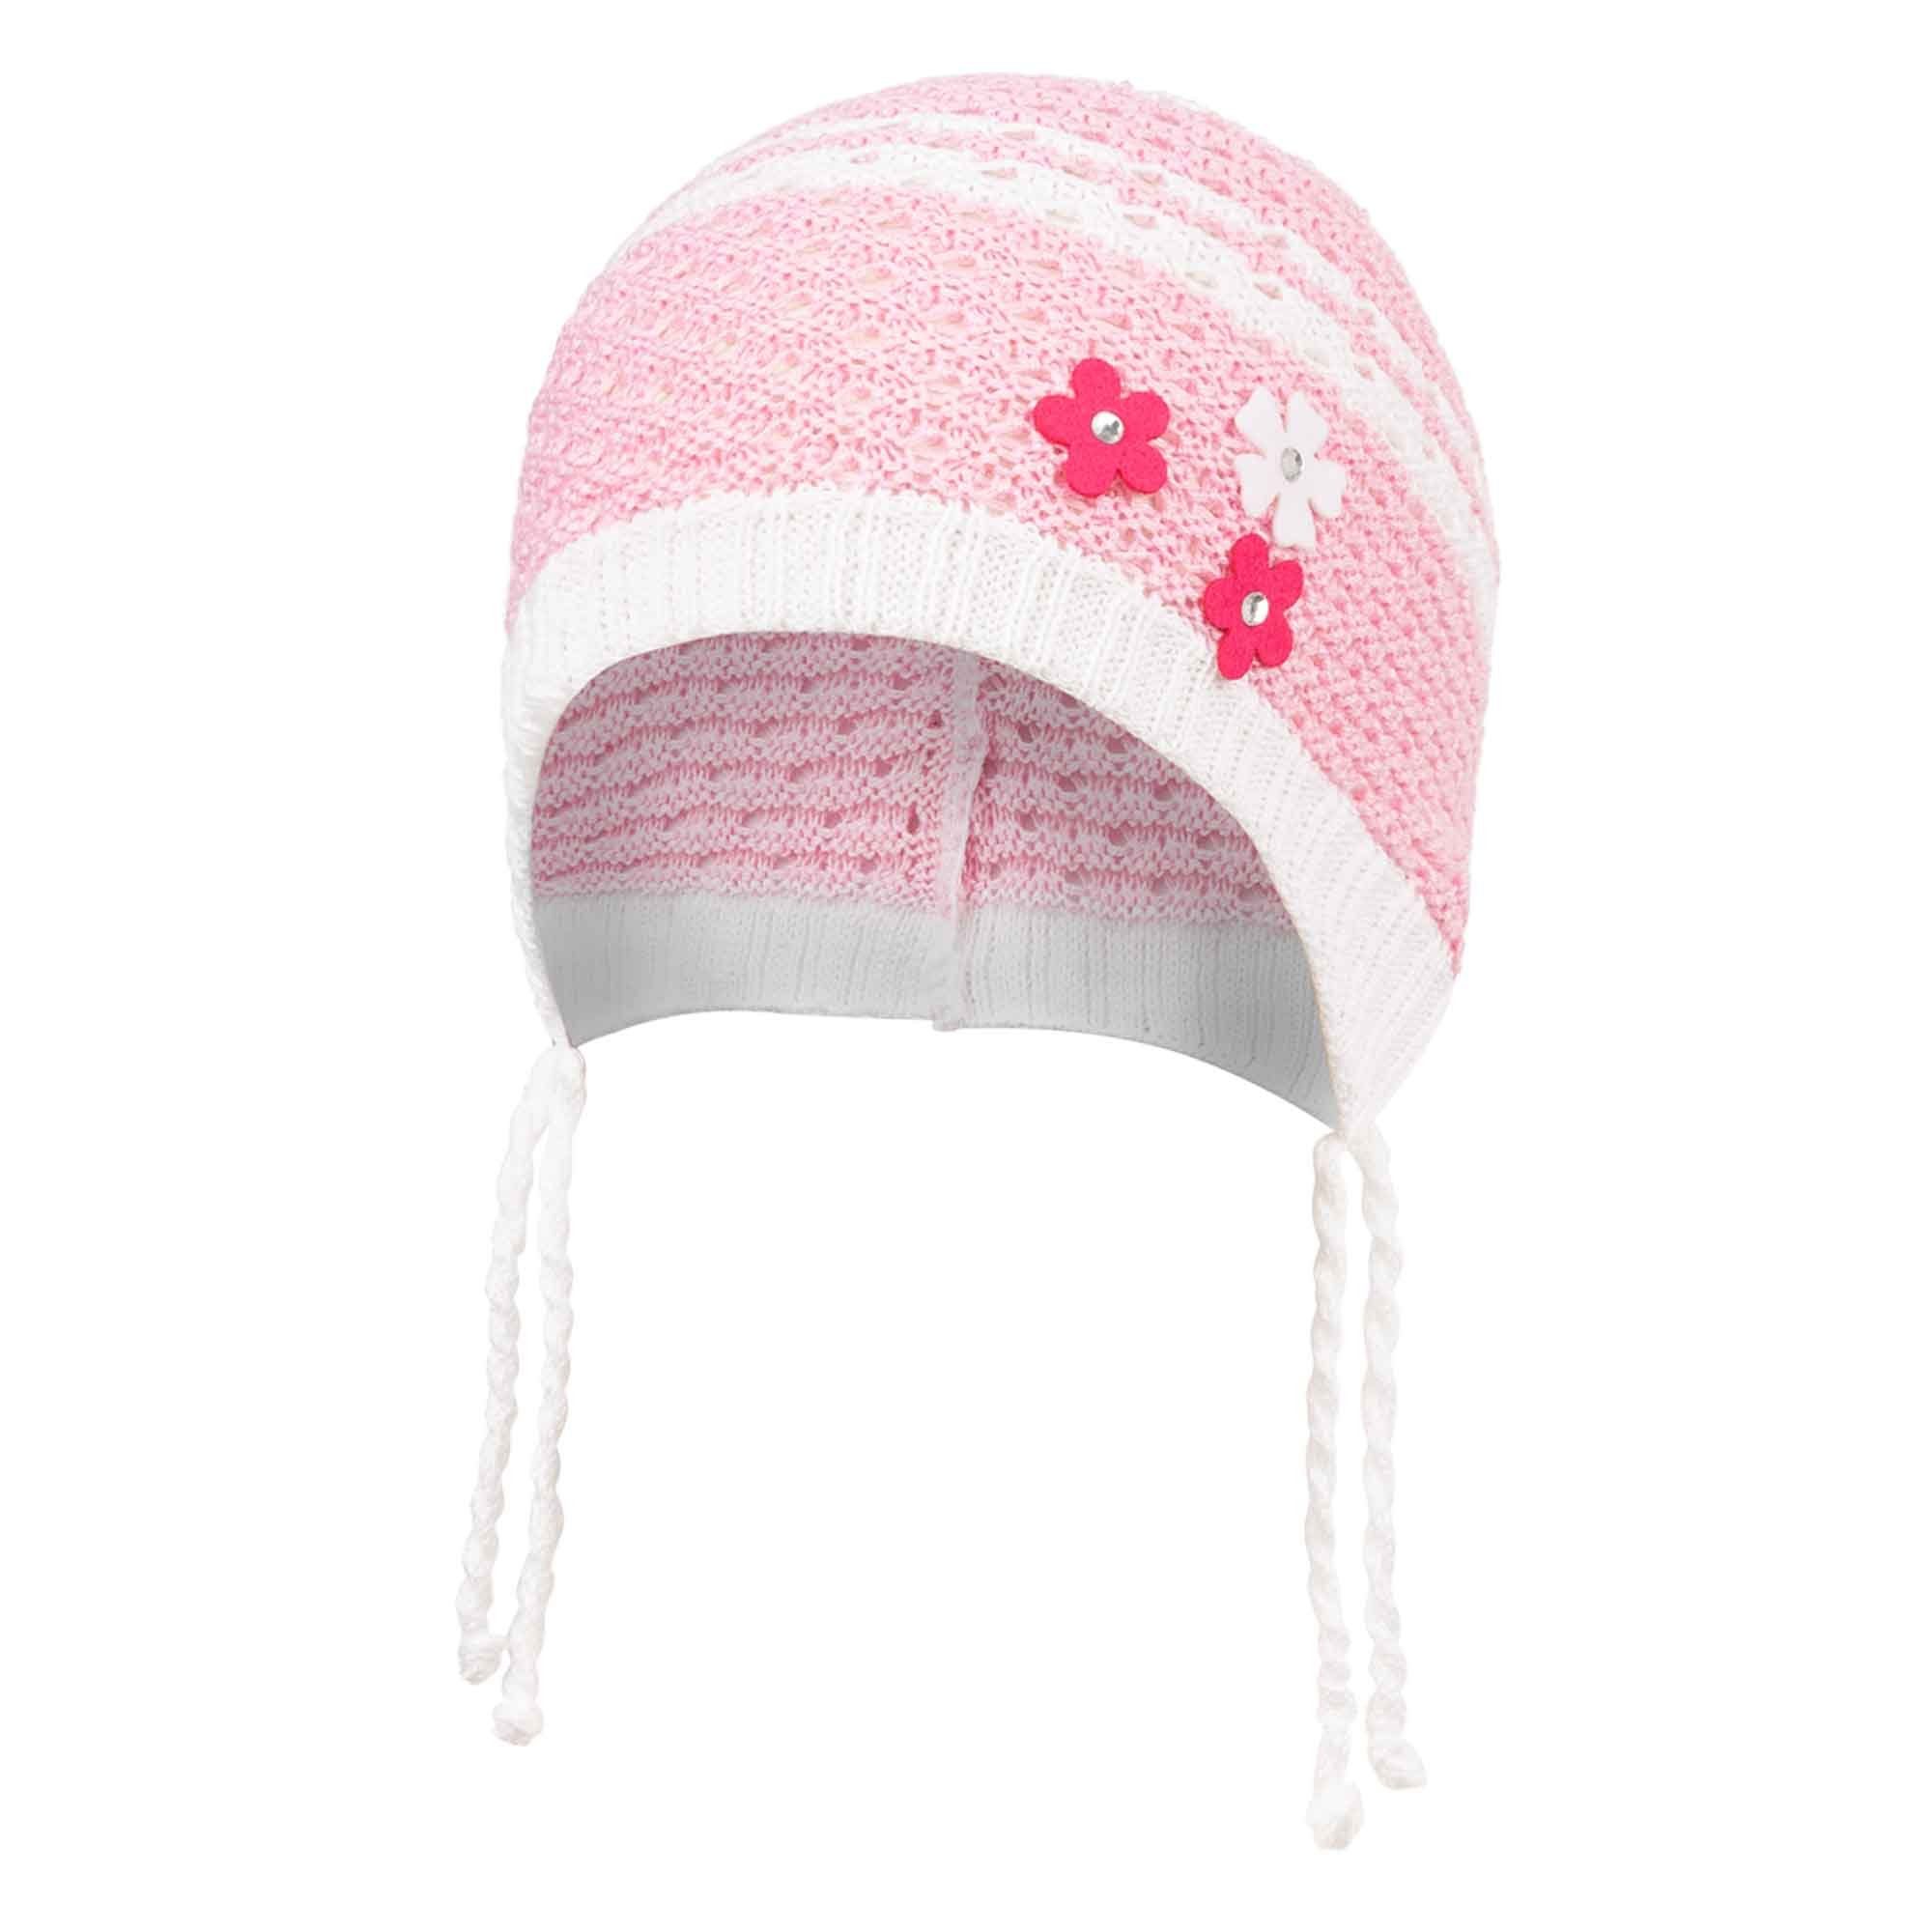 AJS Strickmütze Übergangsmütze Mädchenmütze Rosa-Weiß | Strickmützen